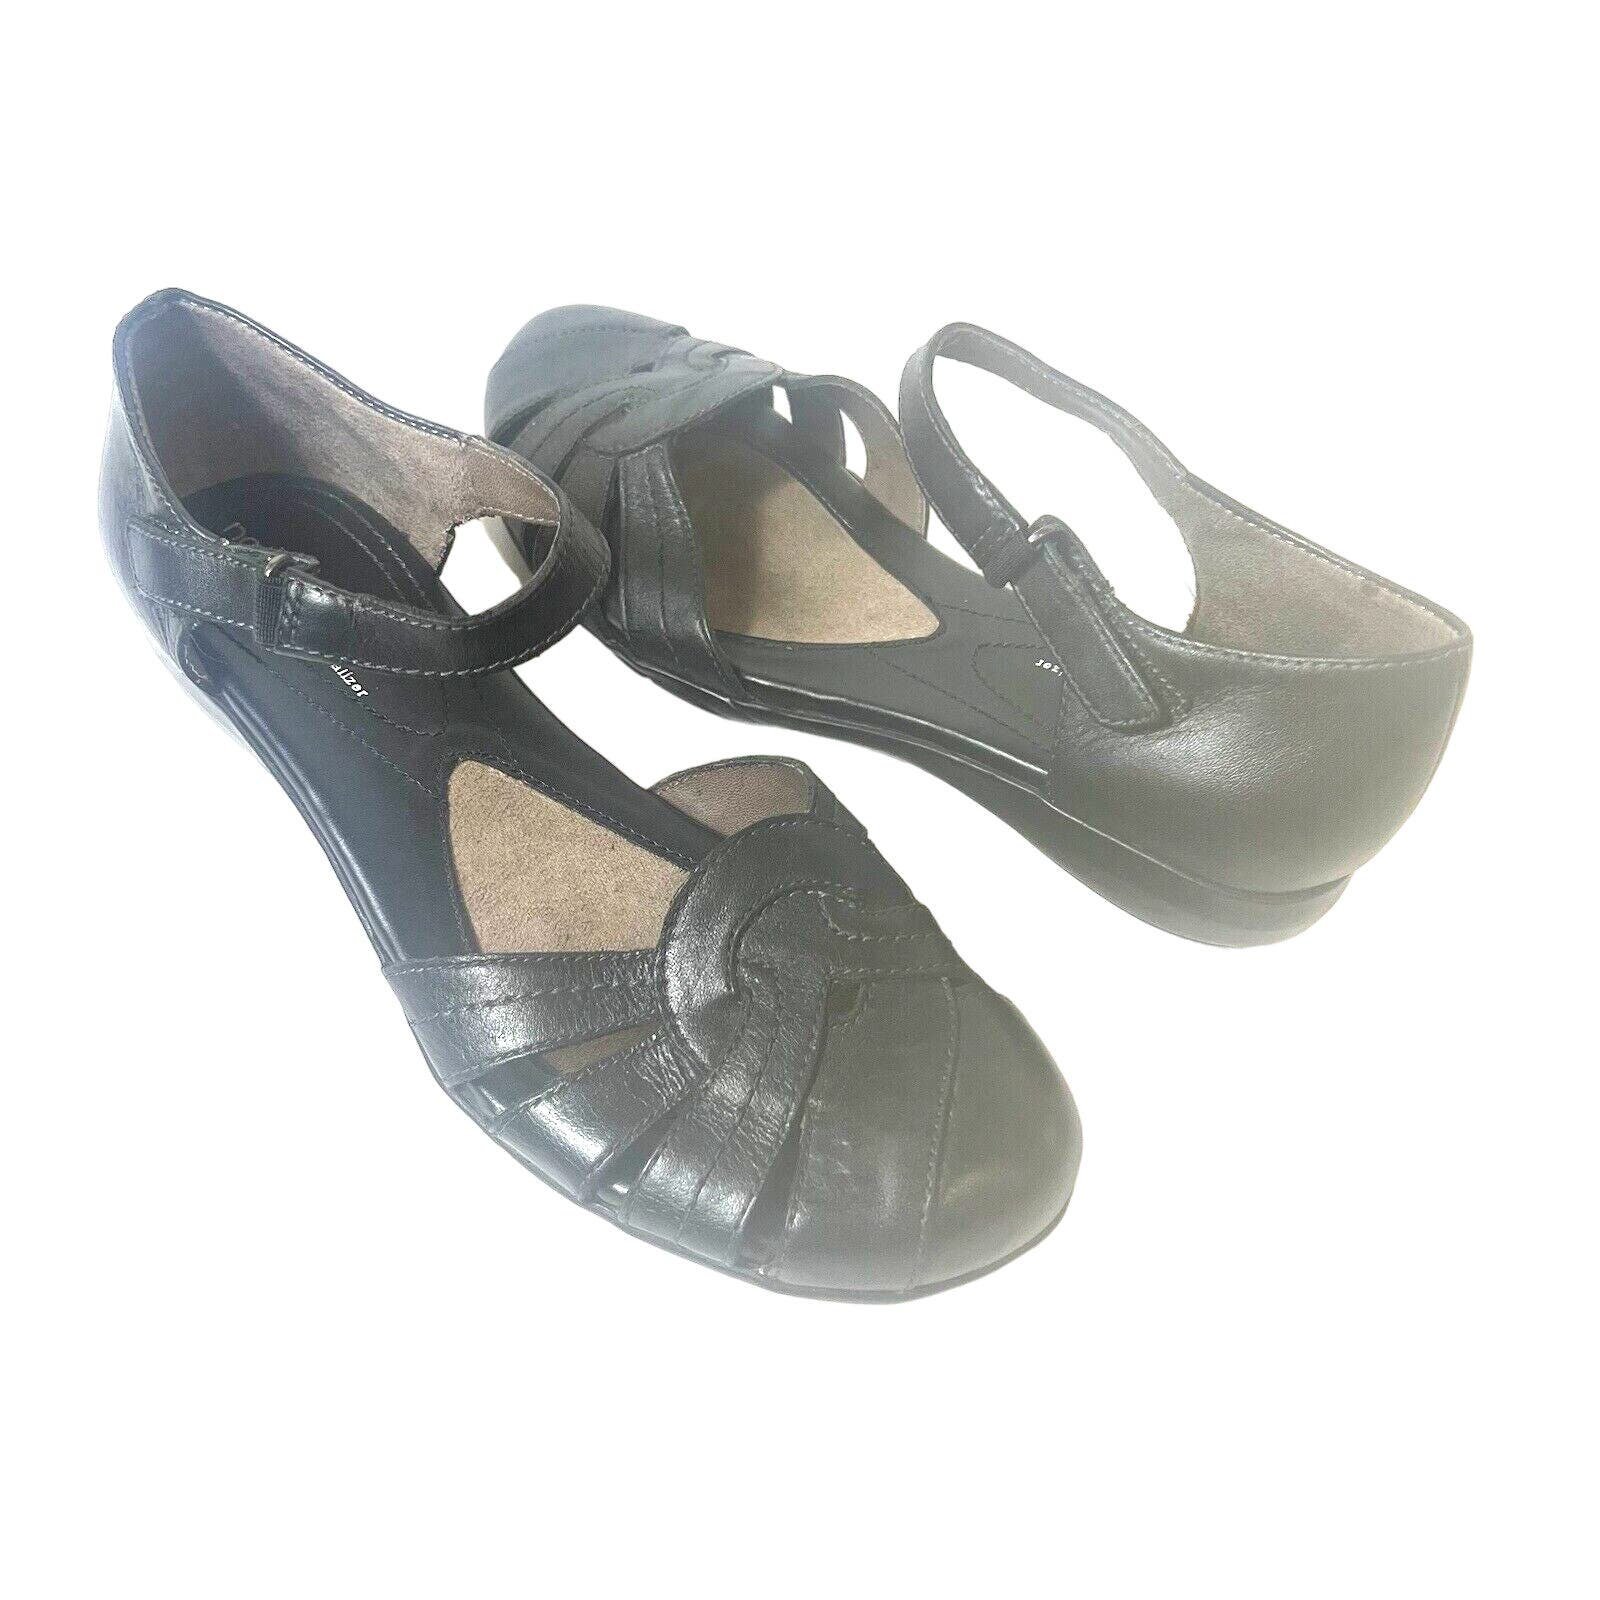 Natural Soul Naturalizer Black Leather Casual Comfort Flat Womens 9M Sandal Shoe gEOnCSj3K